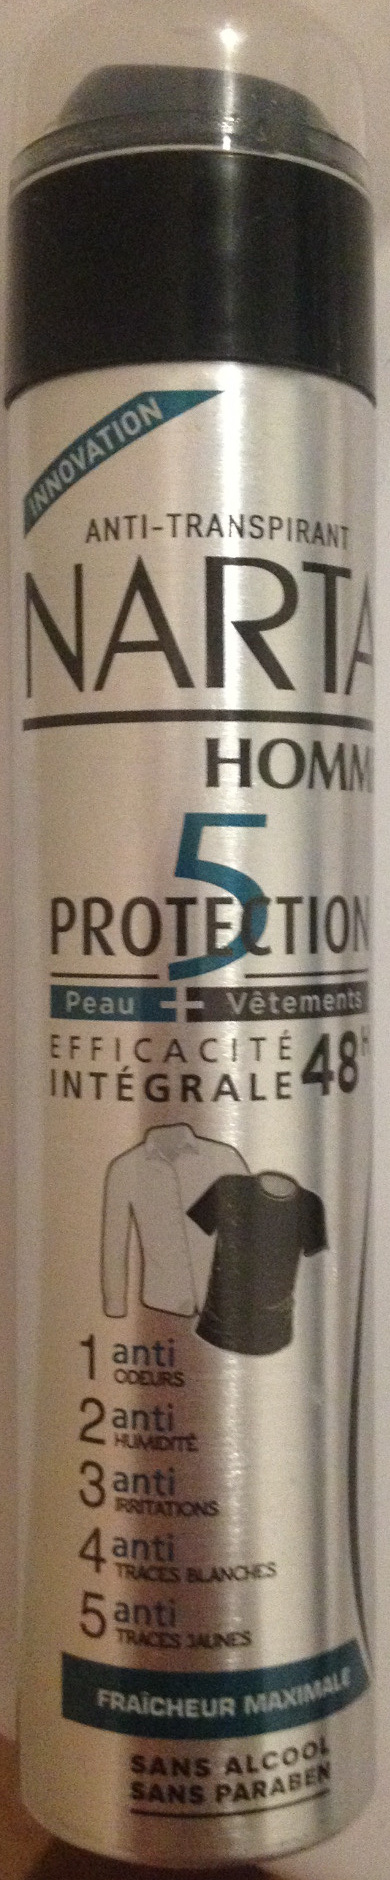 Anti-transpirant Protection 5 - Produit - fr